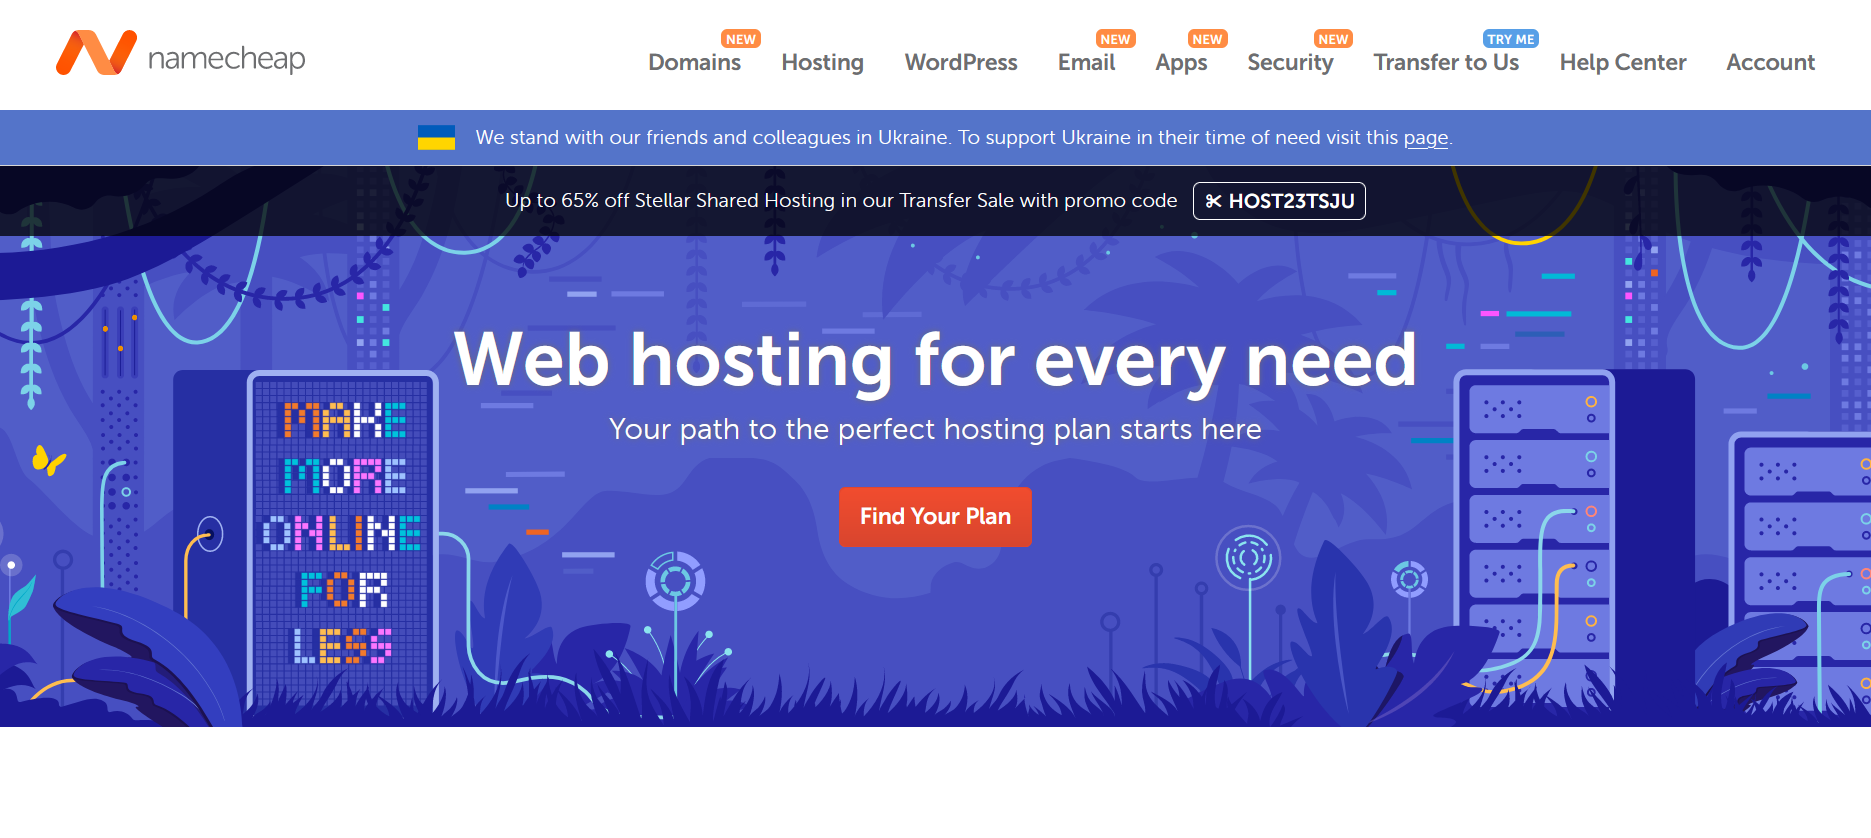 web hosts